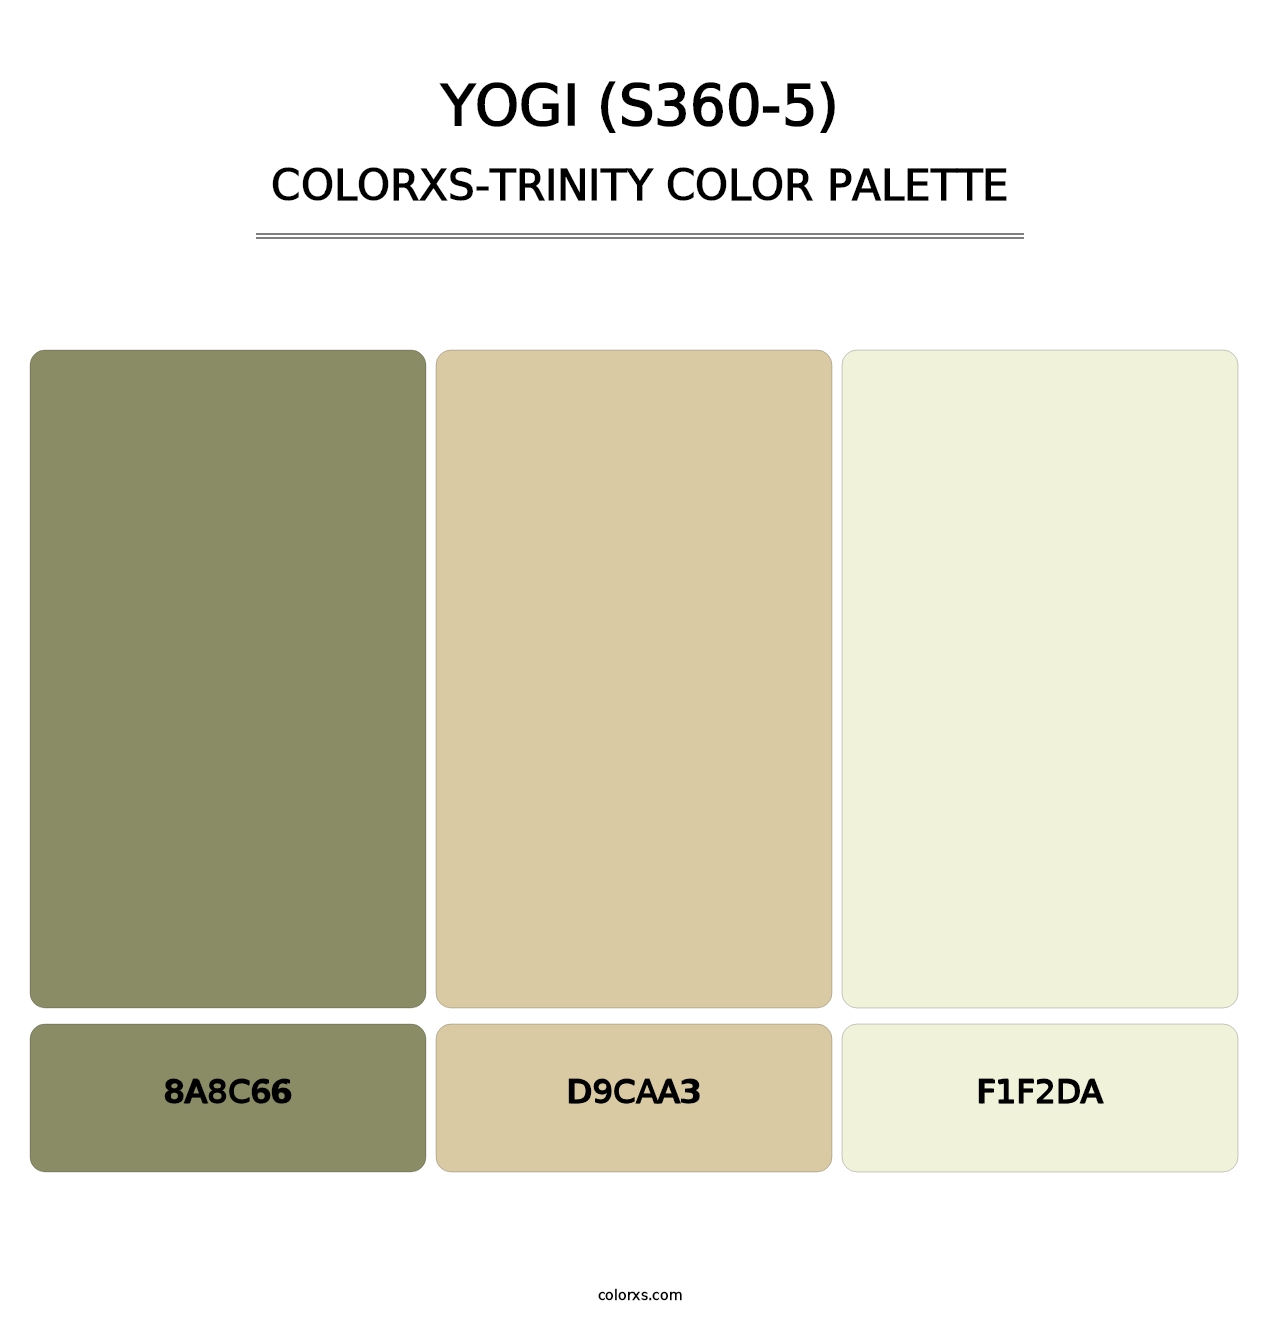 Yogi (S360-5) - Colorxs Trinity Palette